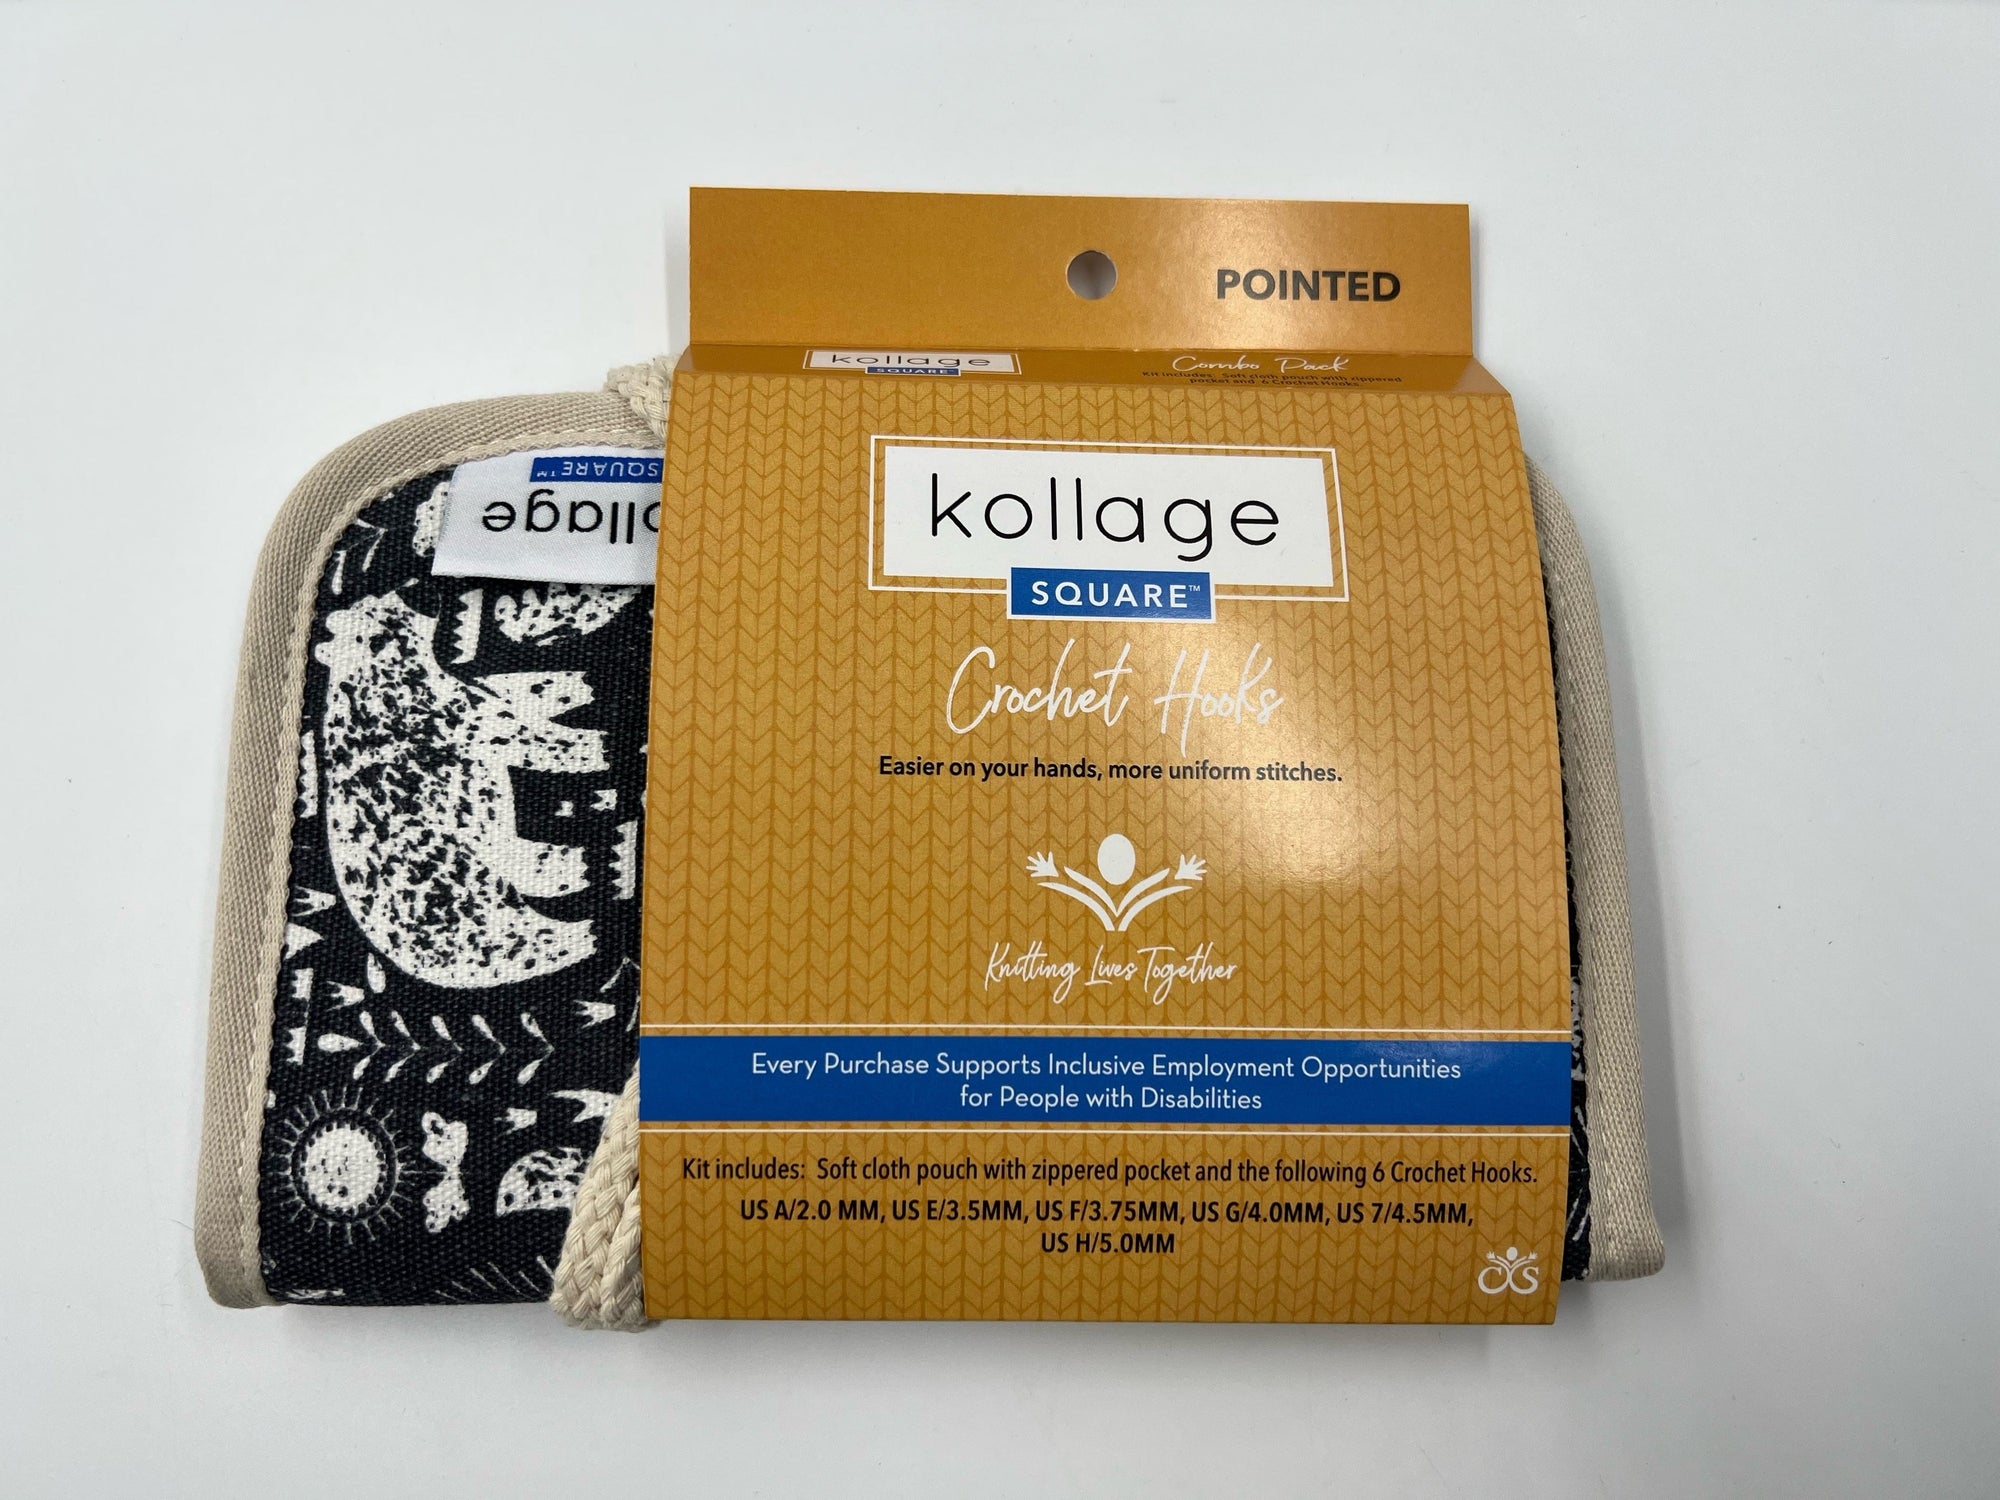 Kollage Square Knitting Needles Ergonomic Crochet Hook Set (Pointed) - Kollage Square